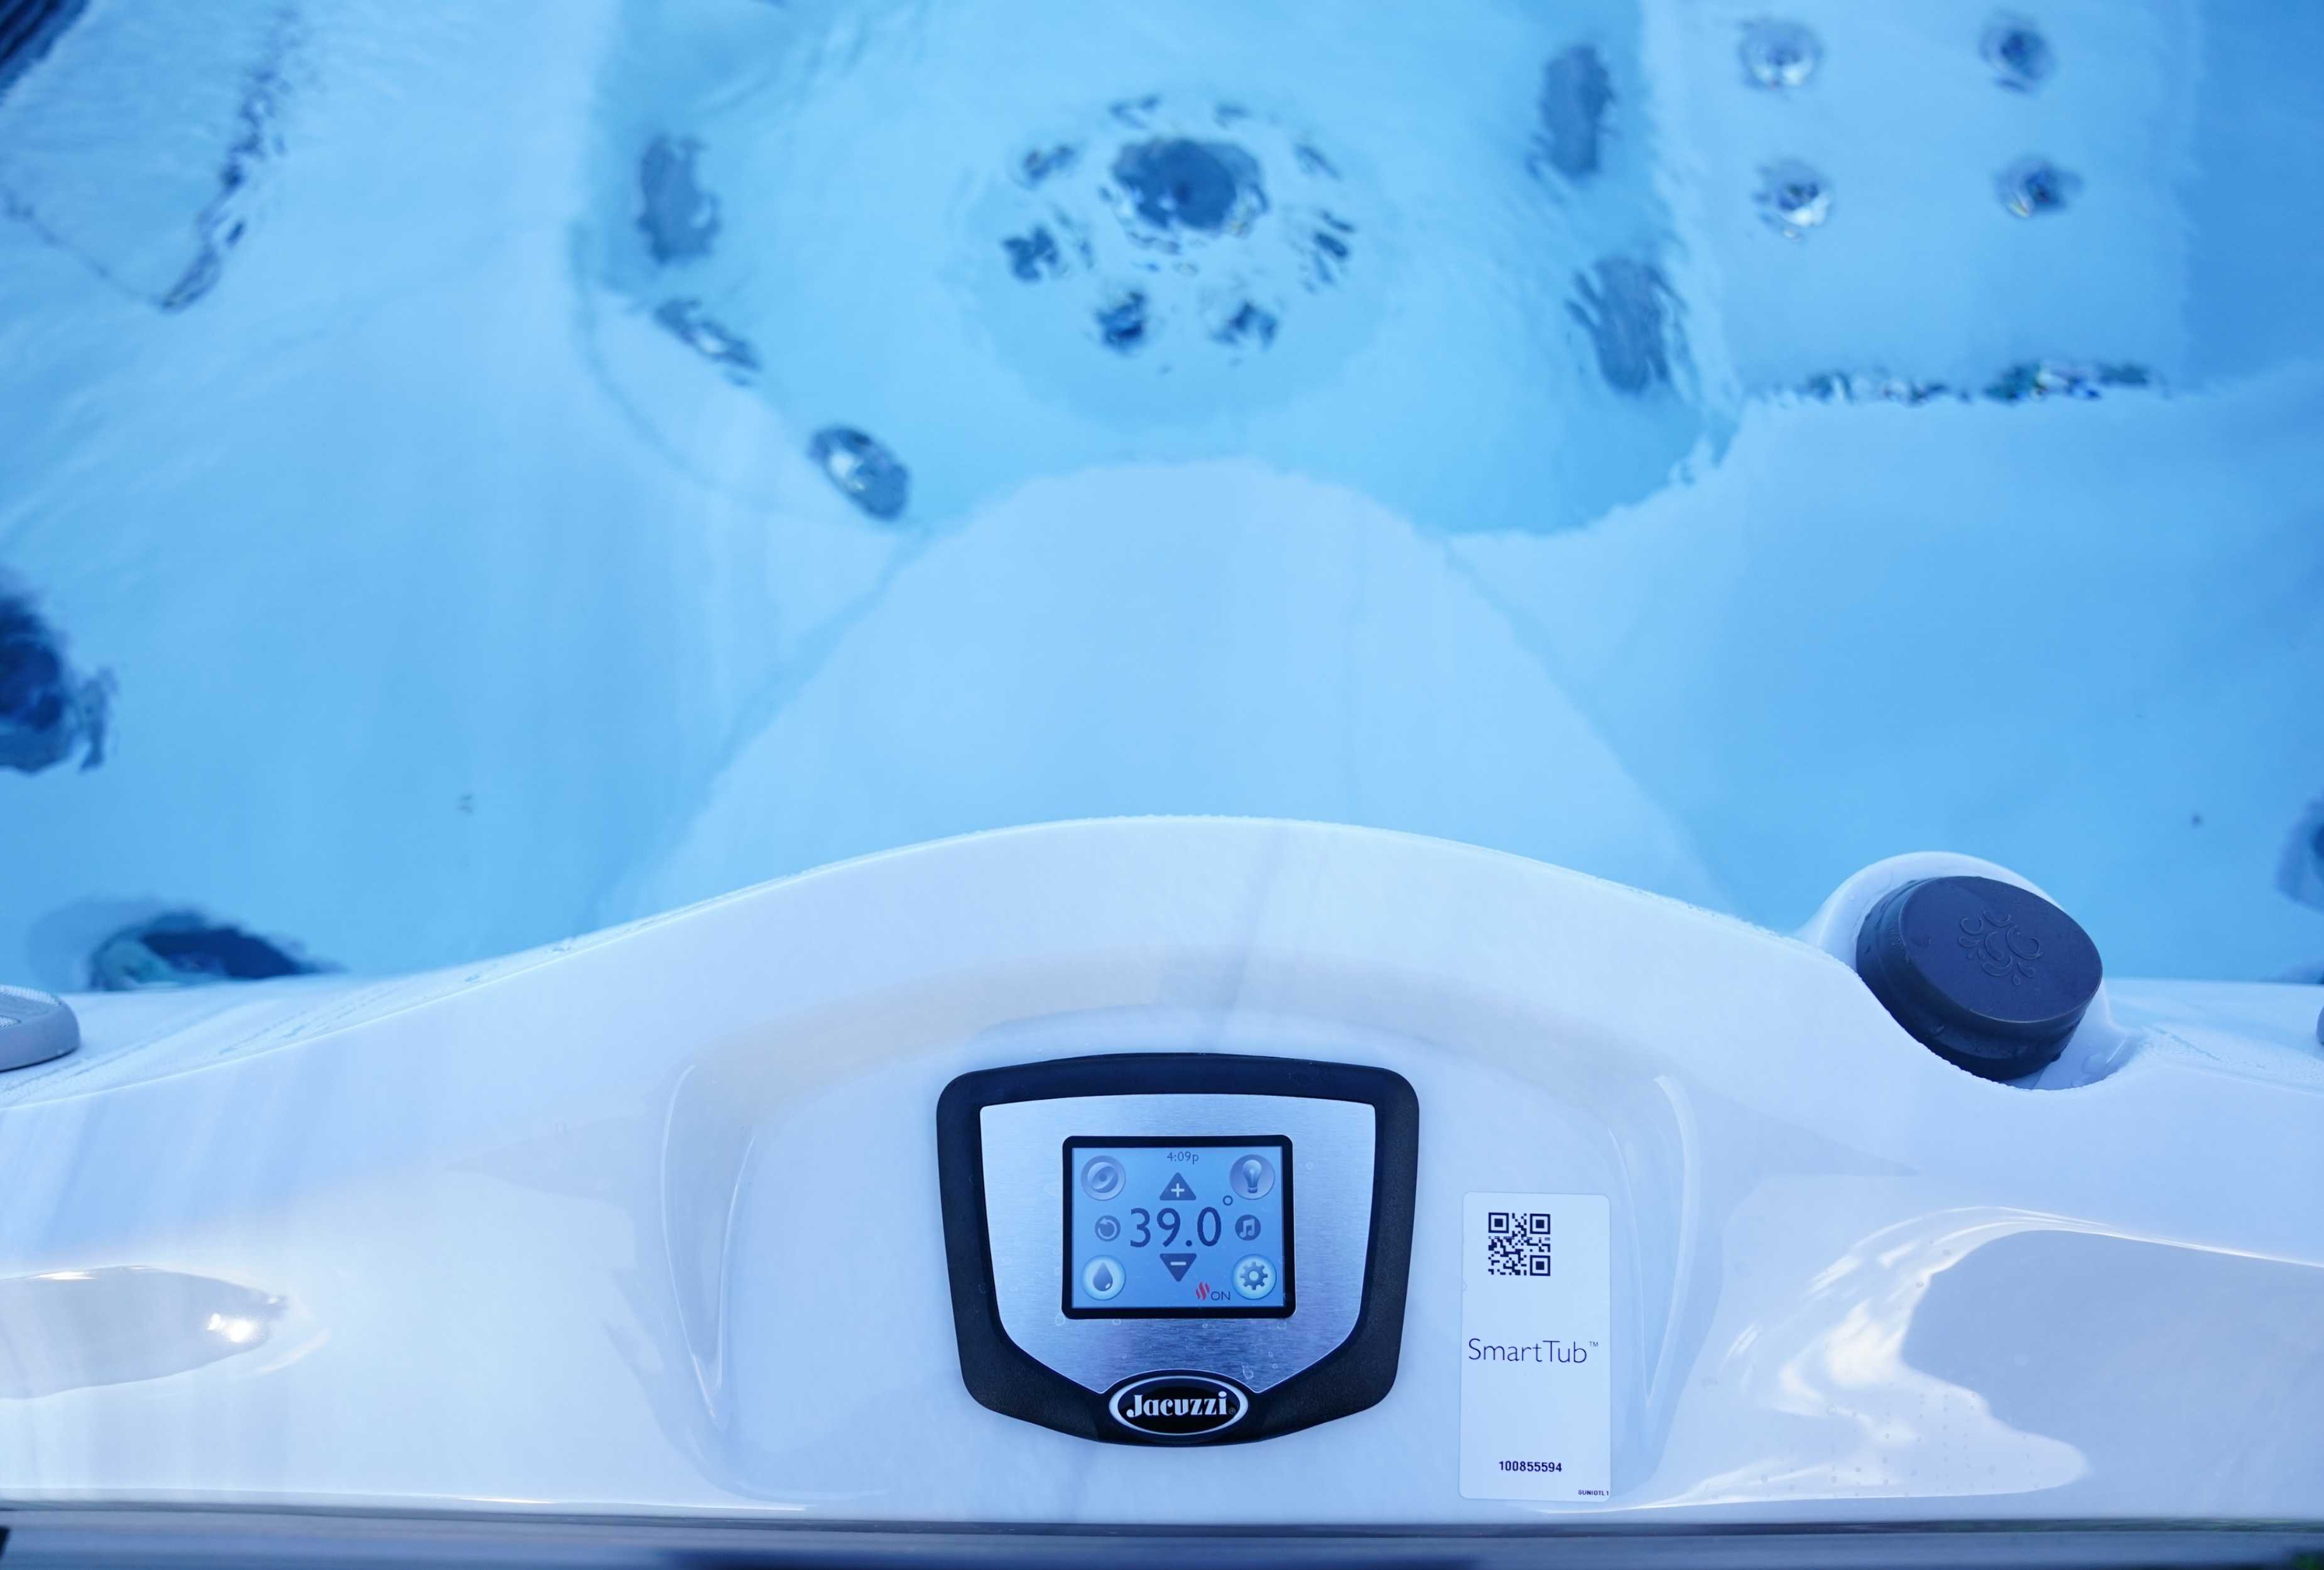 Jacuzzi smart tub image on j300 hot tub